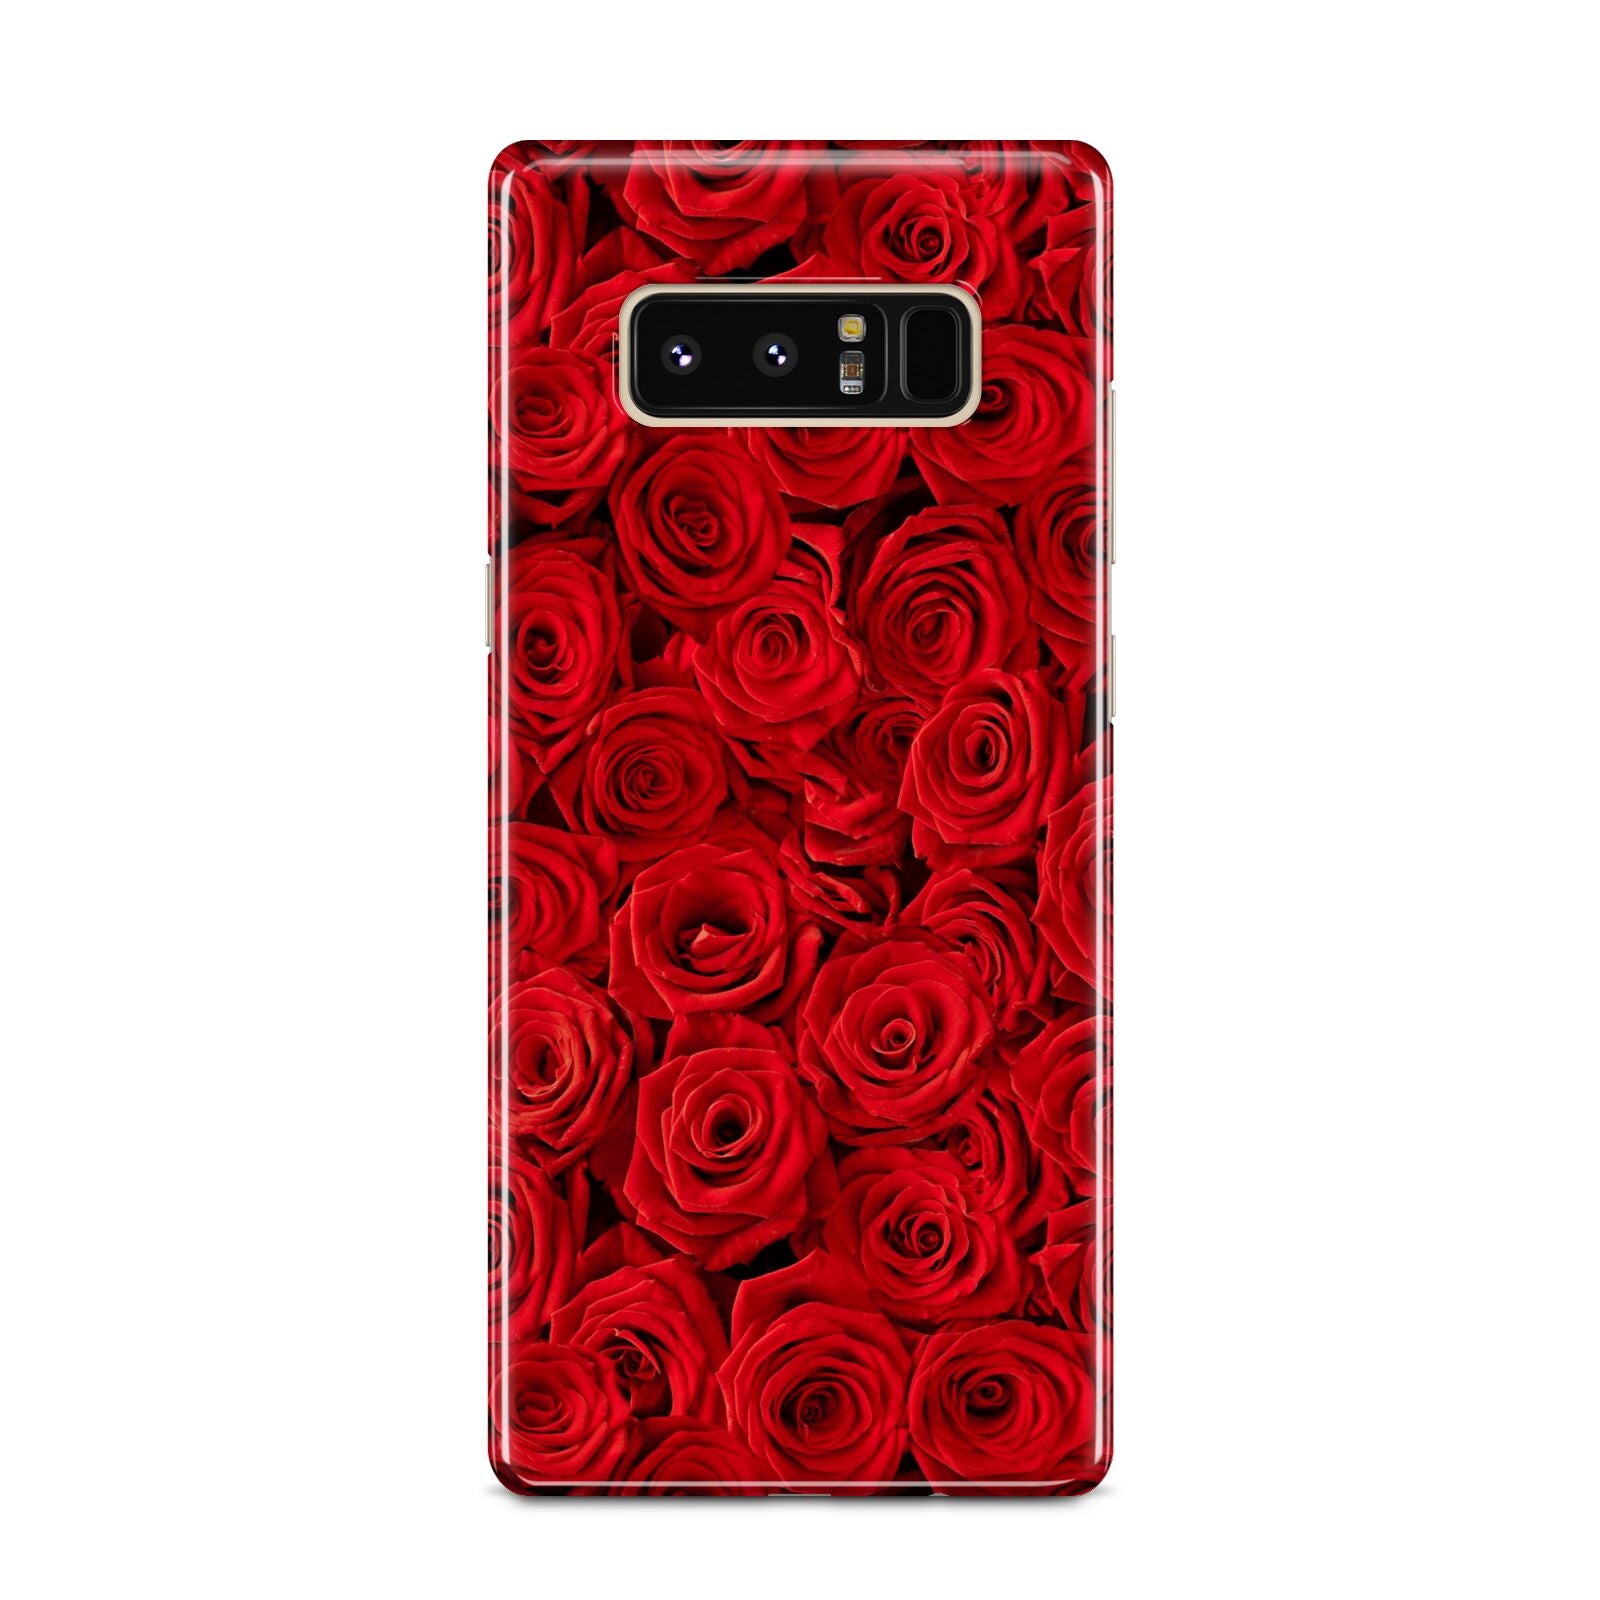 Red Rose Samsung Galaxy Note 8 Case